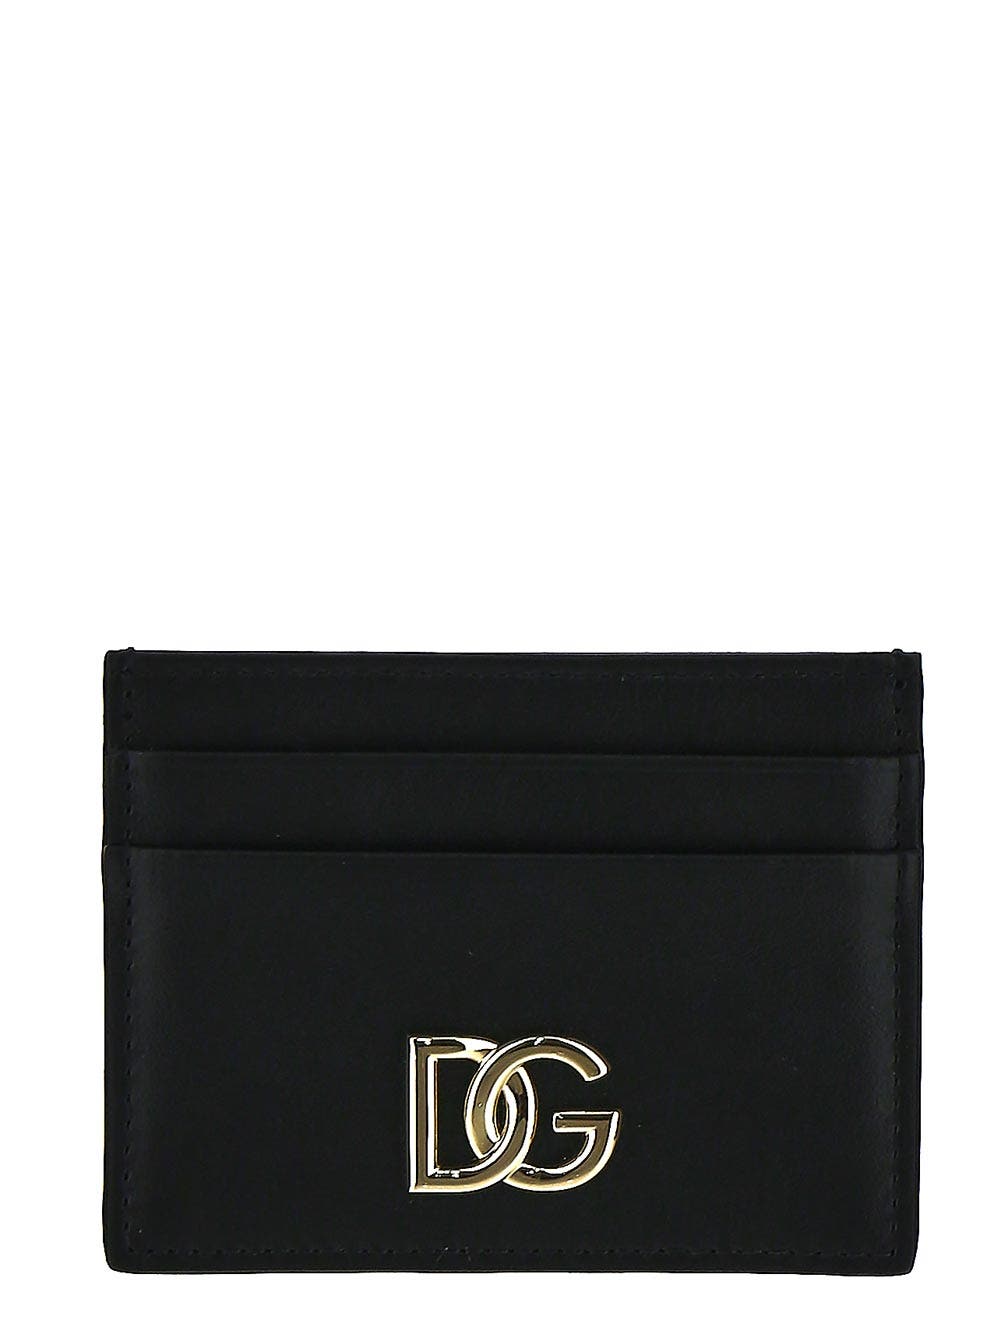 Dolce & Gabbana Logo Wallet